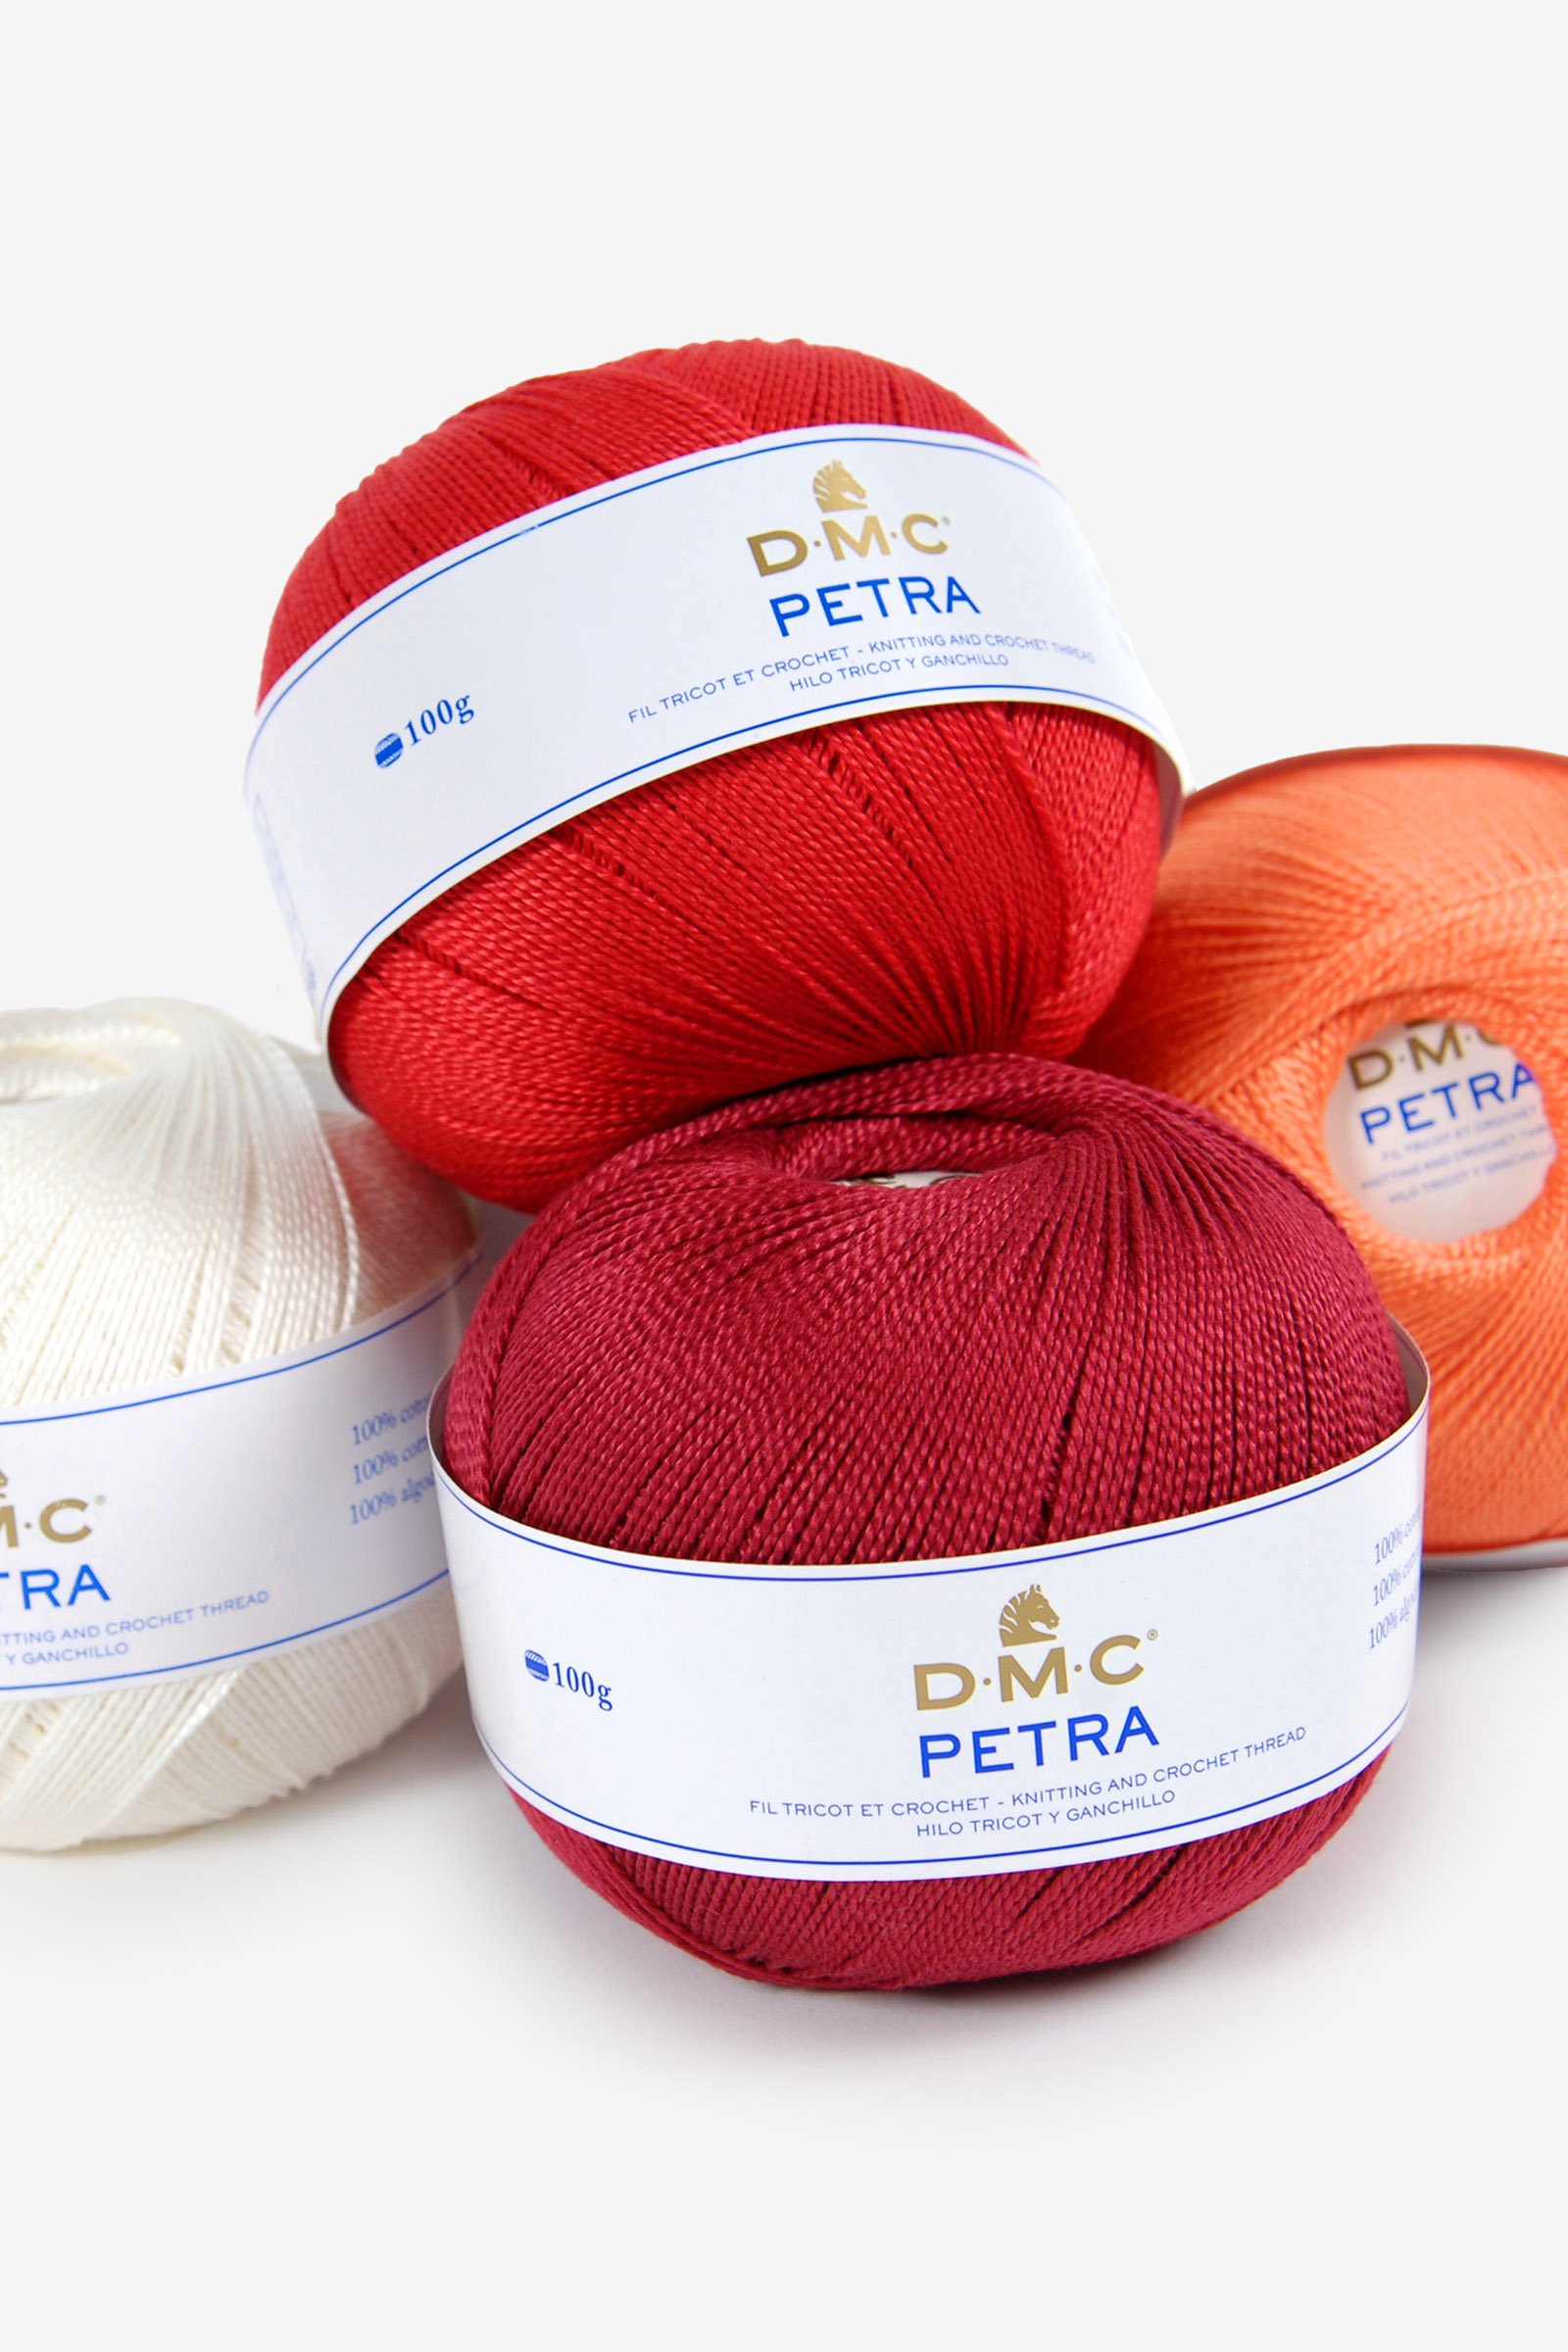 Petra Cotton Thread Size 3 - 100g/306 yds